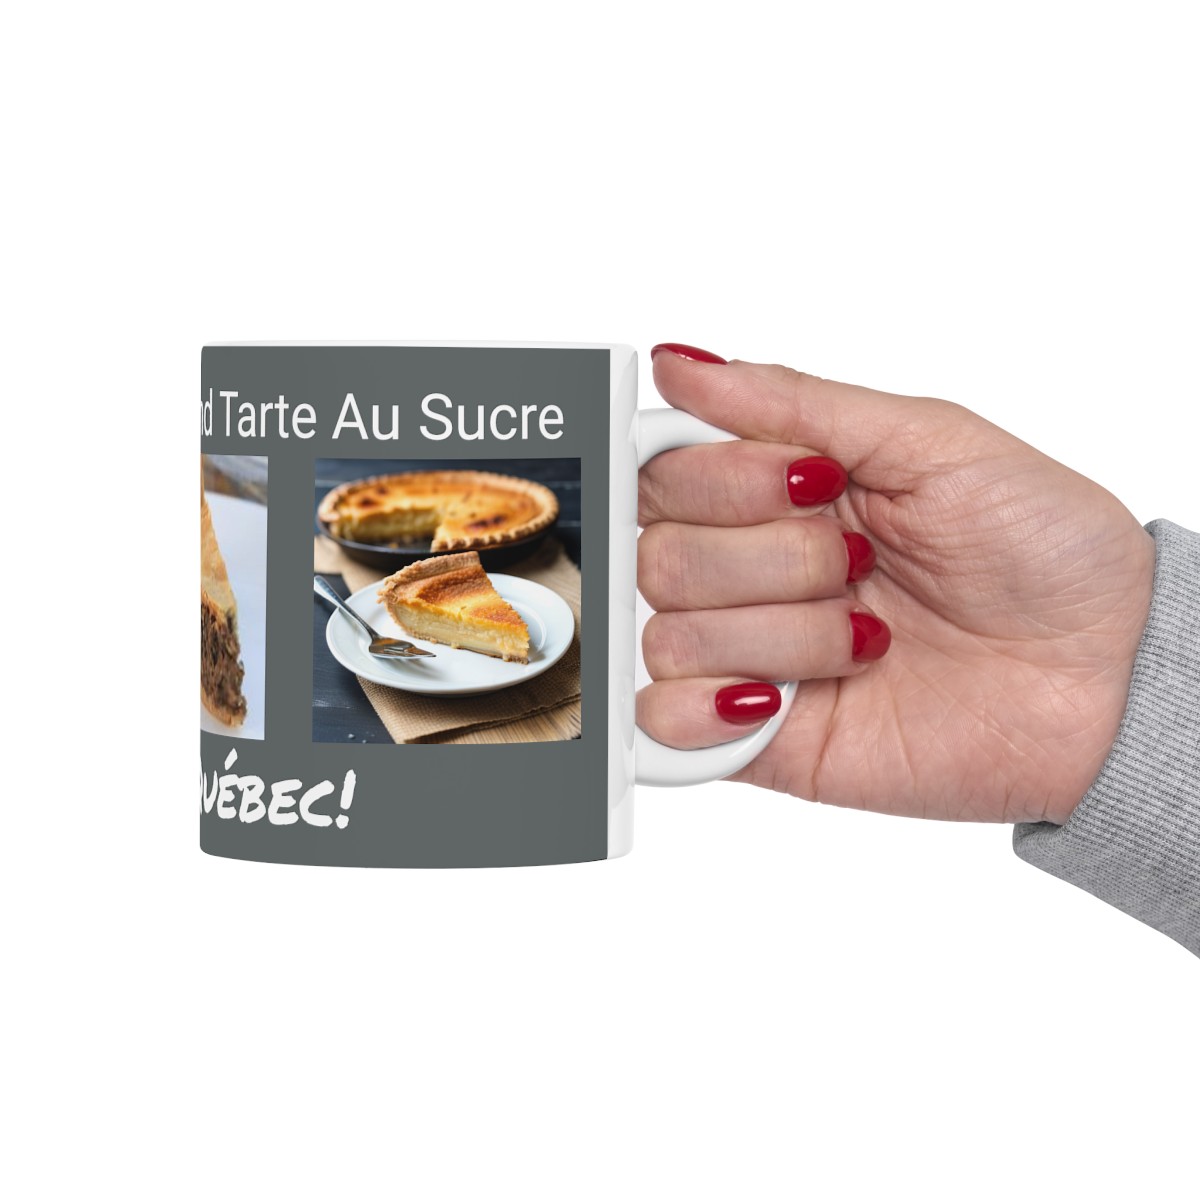 Poutine, Tourtière and Tarte au Sucre - I Love Québec! - Ceramic Mug 11oz product thumbnail image